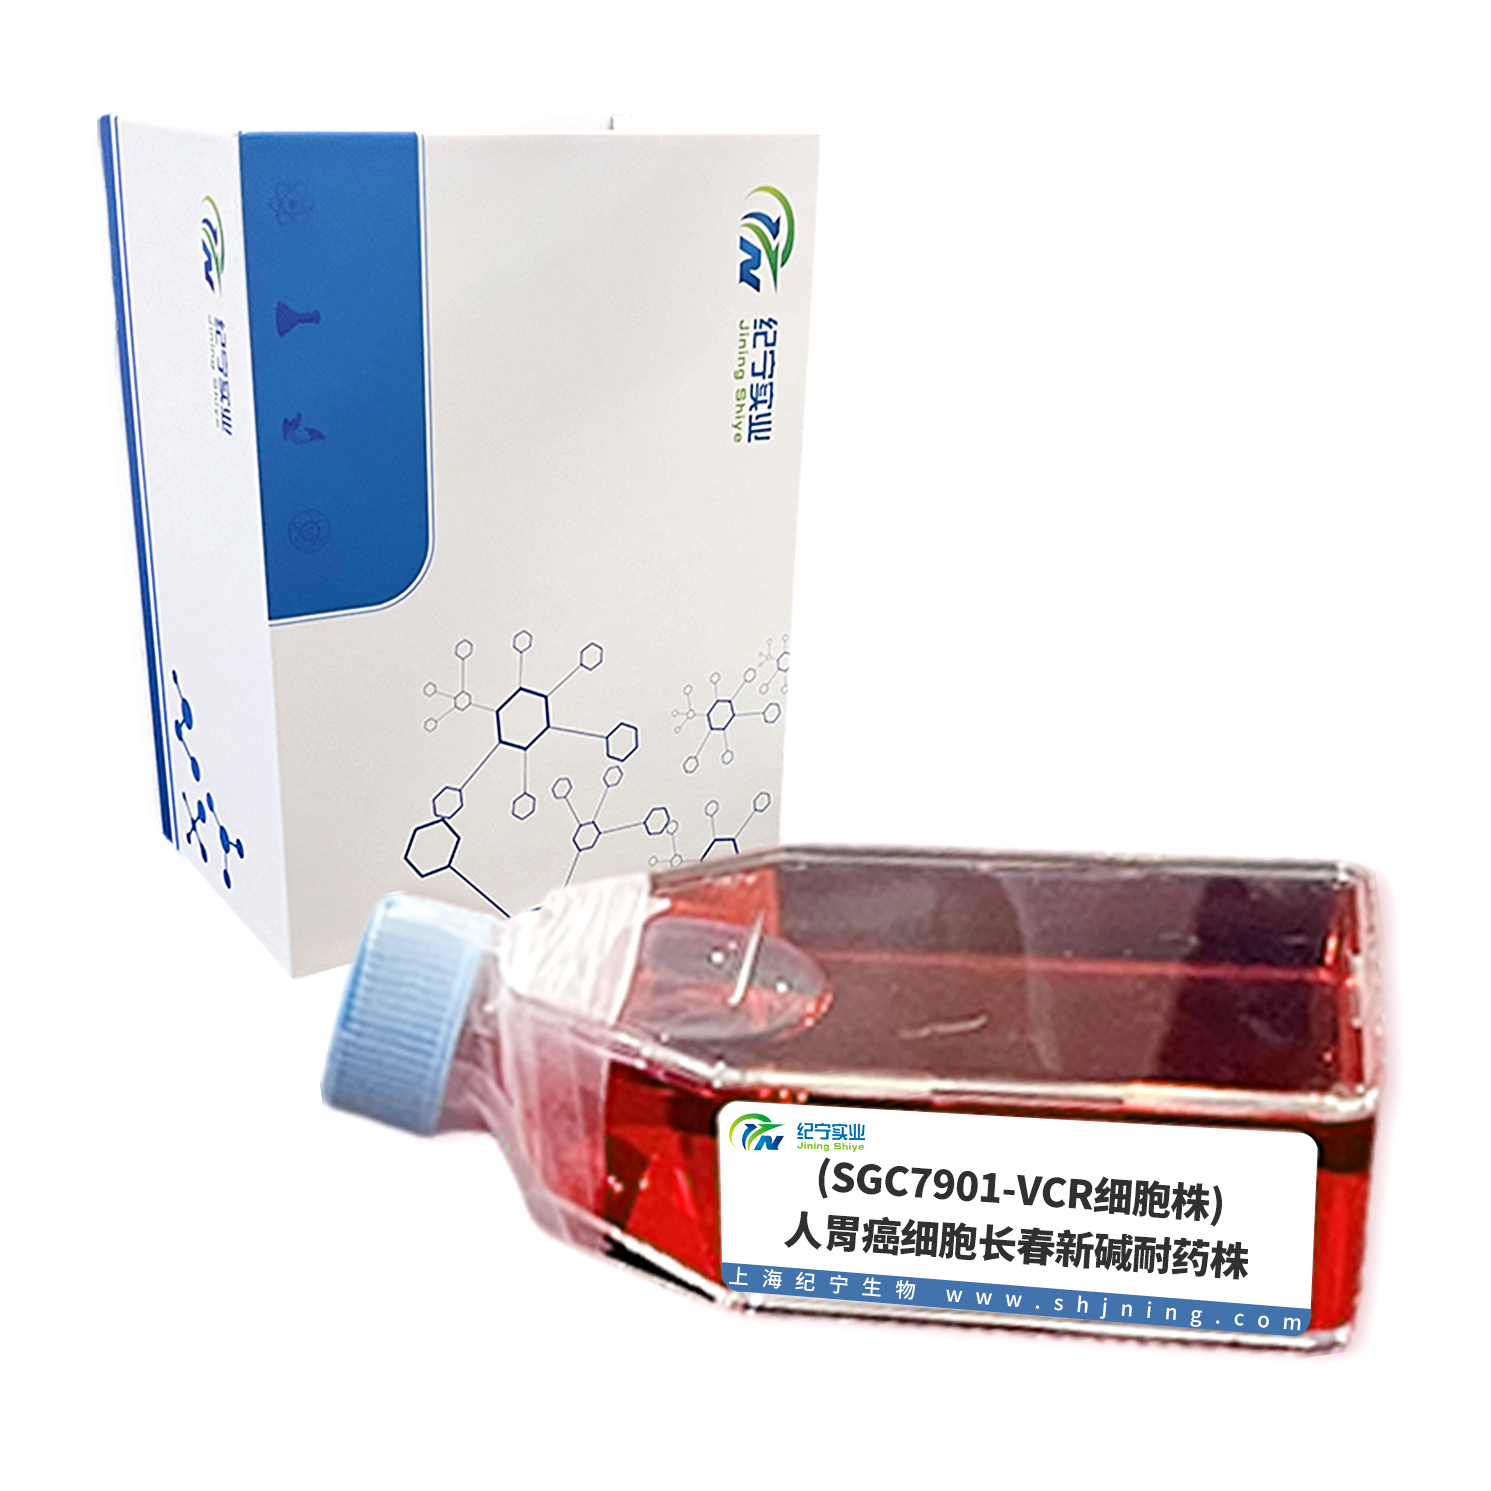 (SGC7901-VCR细胞株)人胃癌细胞长春新碱耐药株